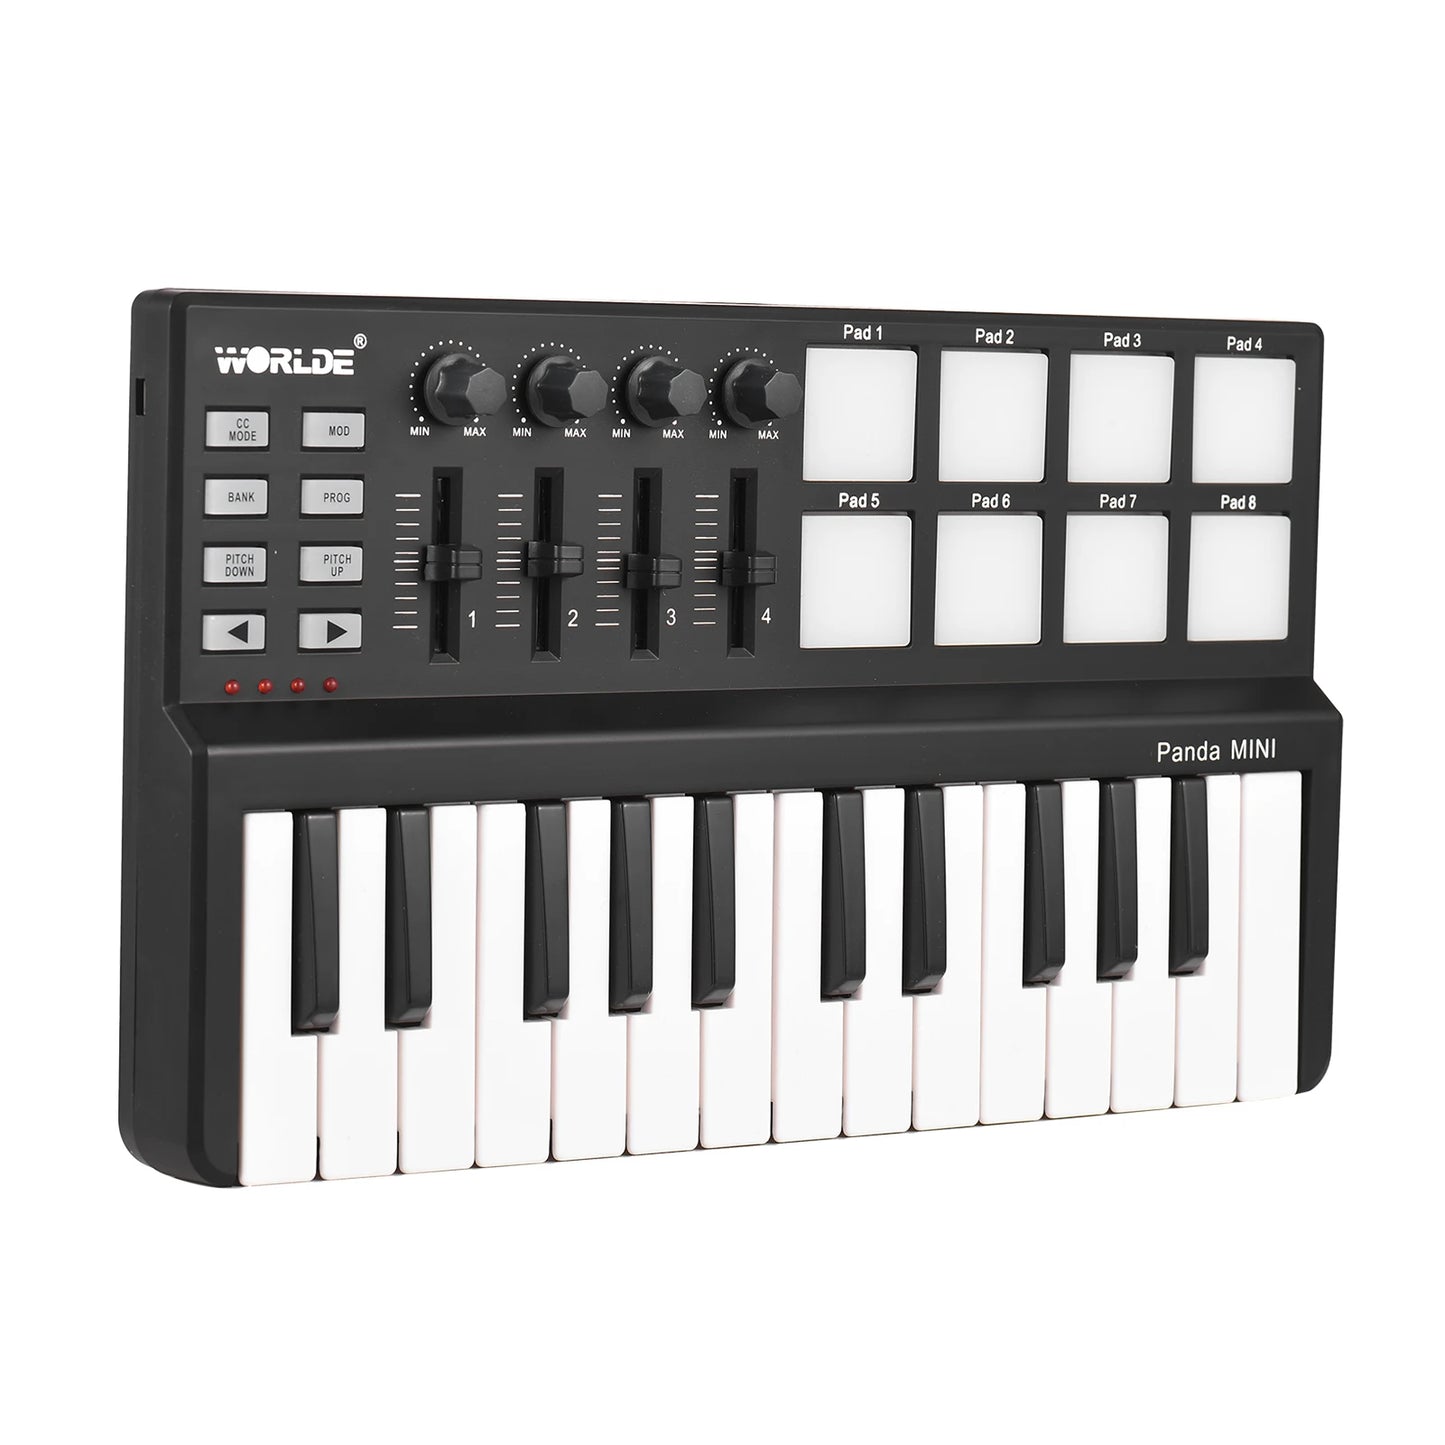 WORLDE Panda mini Portable 25-Key USB MIDI Keyboard and Drum Pad MIDI